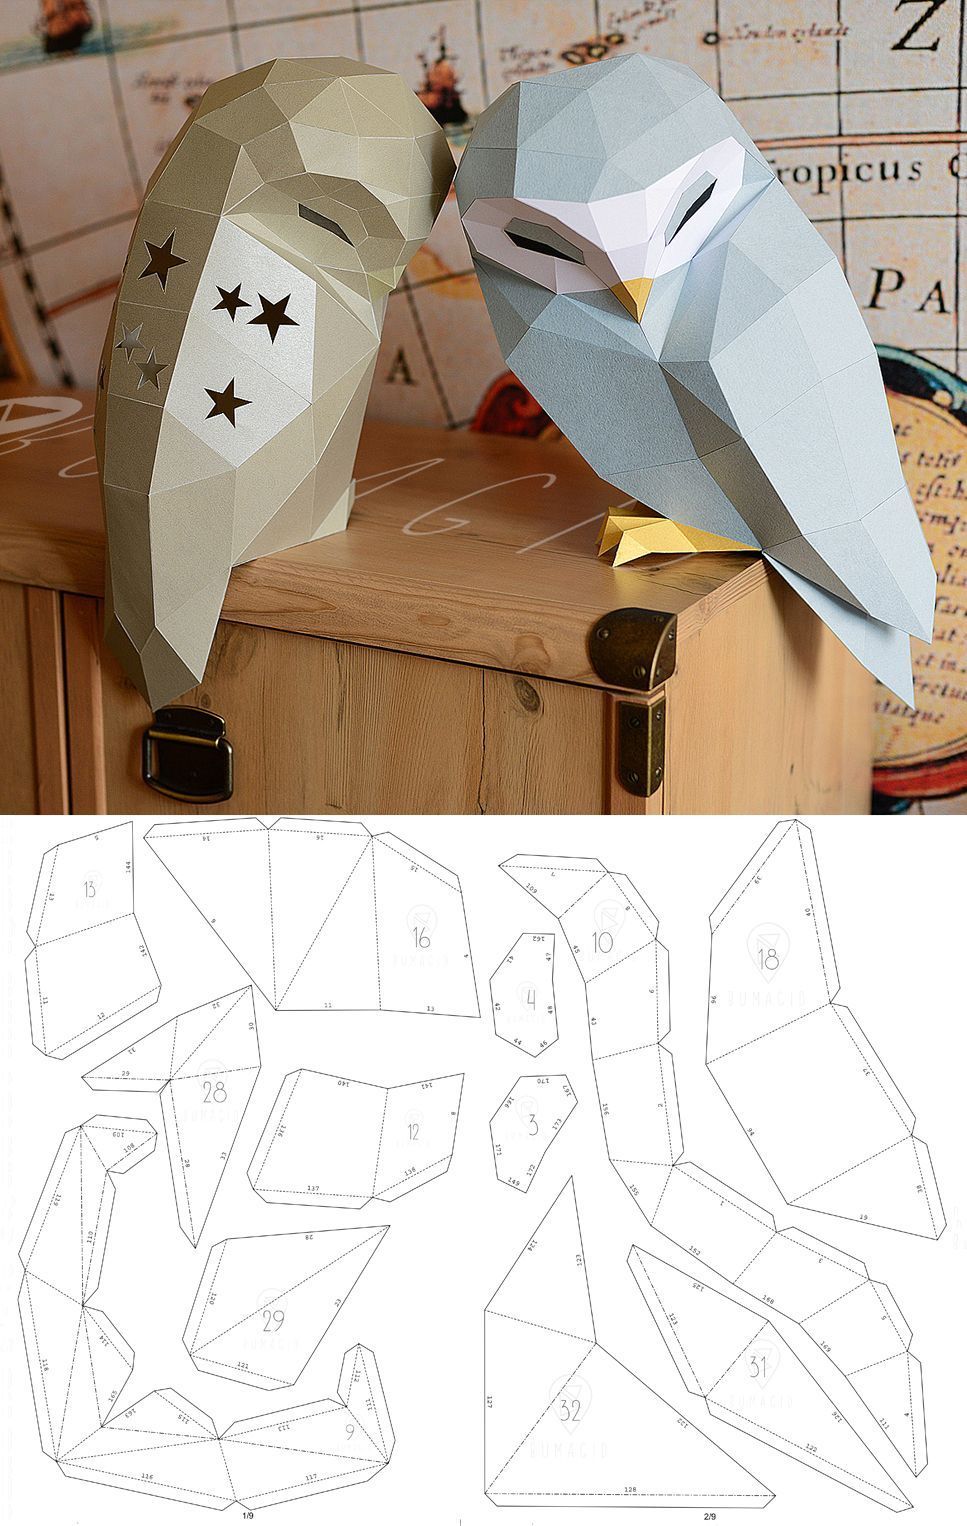 Owl Model Owl Low poly Owl Sculpture Owl paper Papercraft Kit DIY 3D Paper Crafts animals - Owl Model Owl Low poly Owl Sculpture Owl paper Papercraft Kit DIY 3D Paper Crafts animals -   17 diy Paper crafts ideas